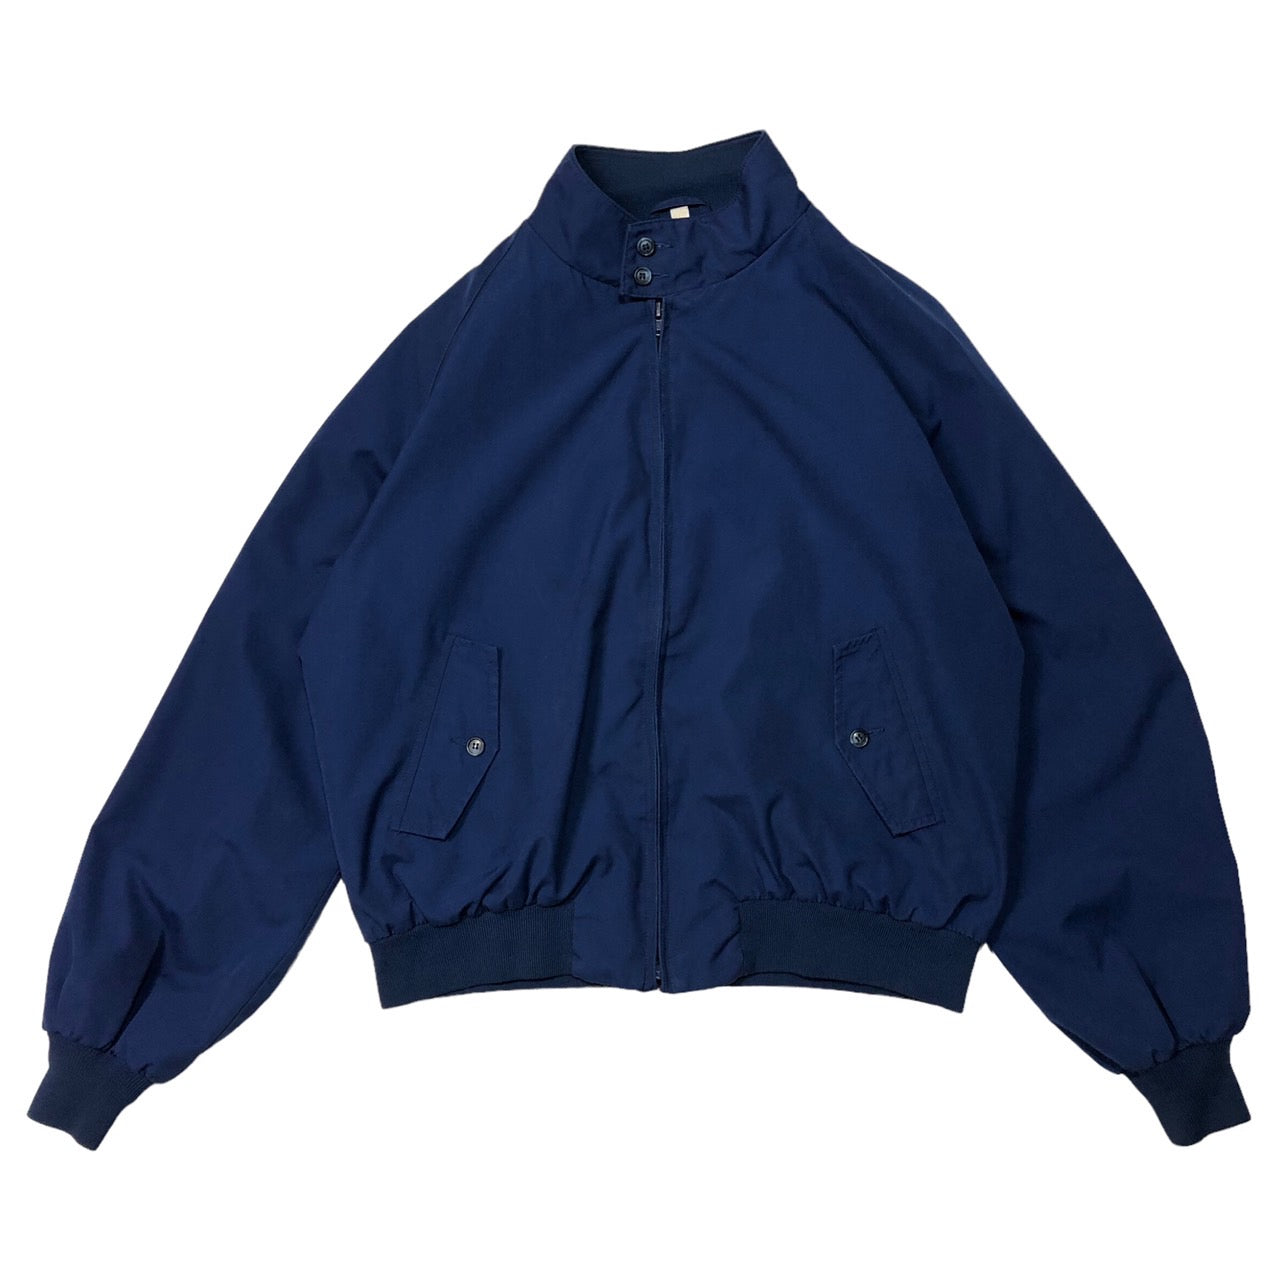 BARACUTA by VAN HEUSEN(バラクータバンヒューゼン) 80's G9 jacket/スイングトップジャケット 46R(M程度) ネイビー 80年代/VAN HEUSENライセンス